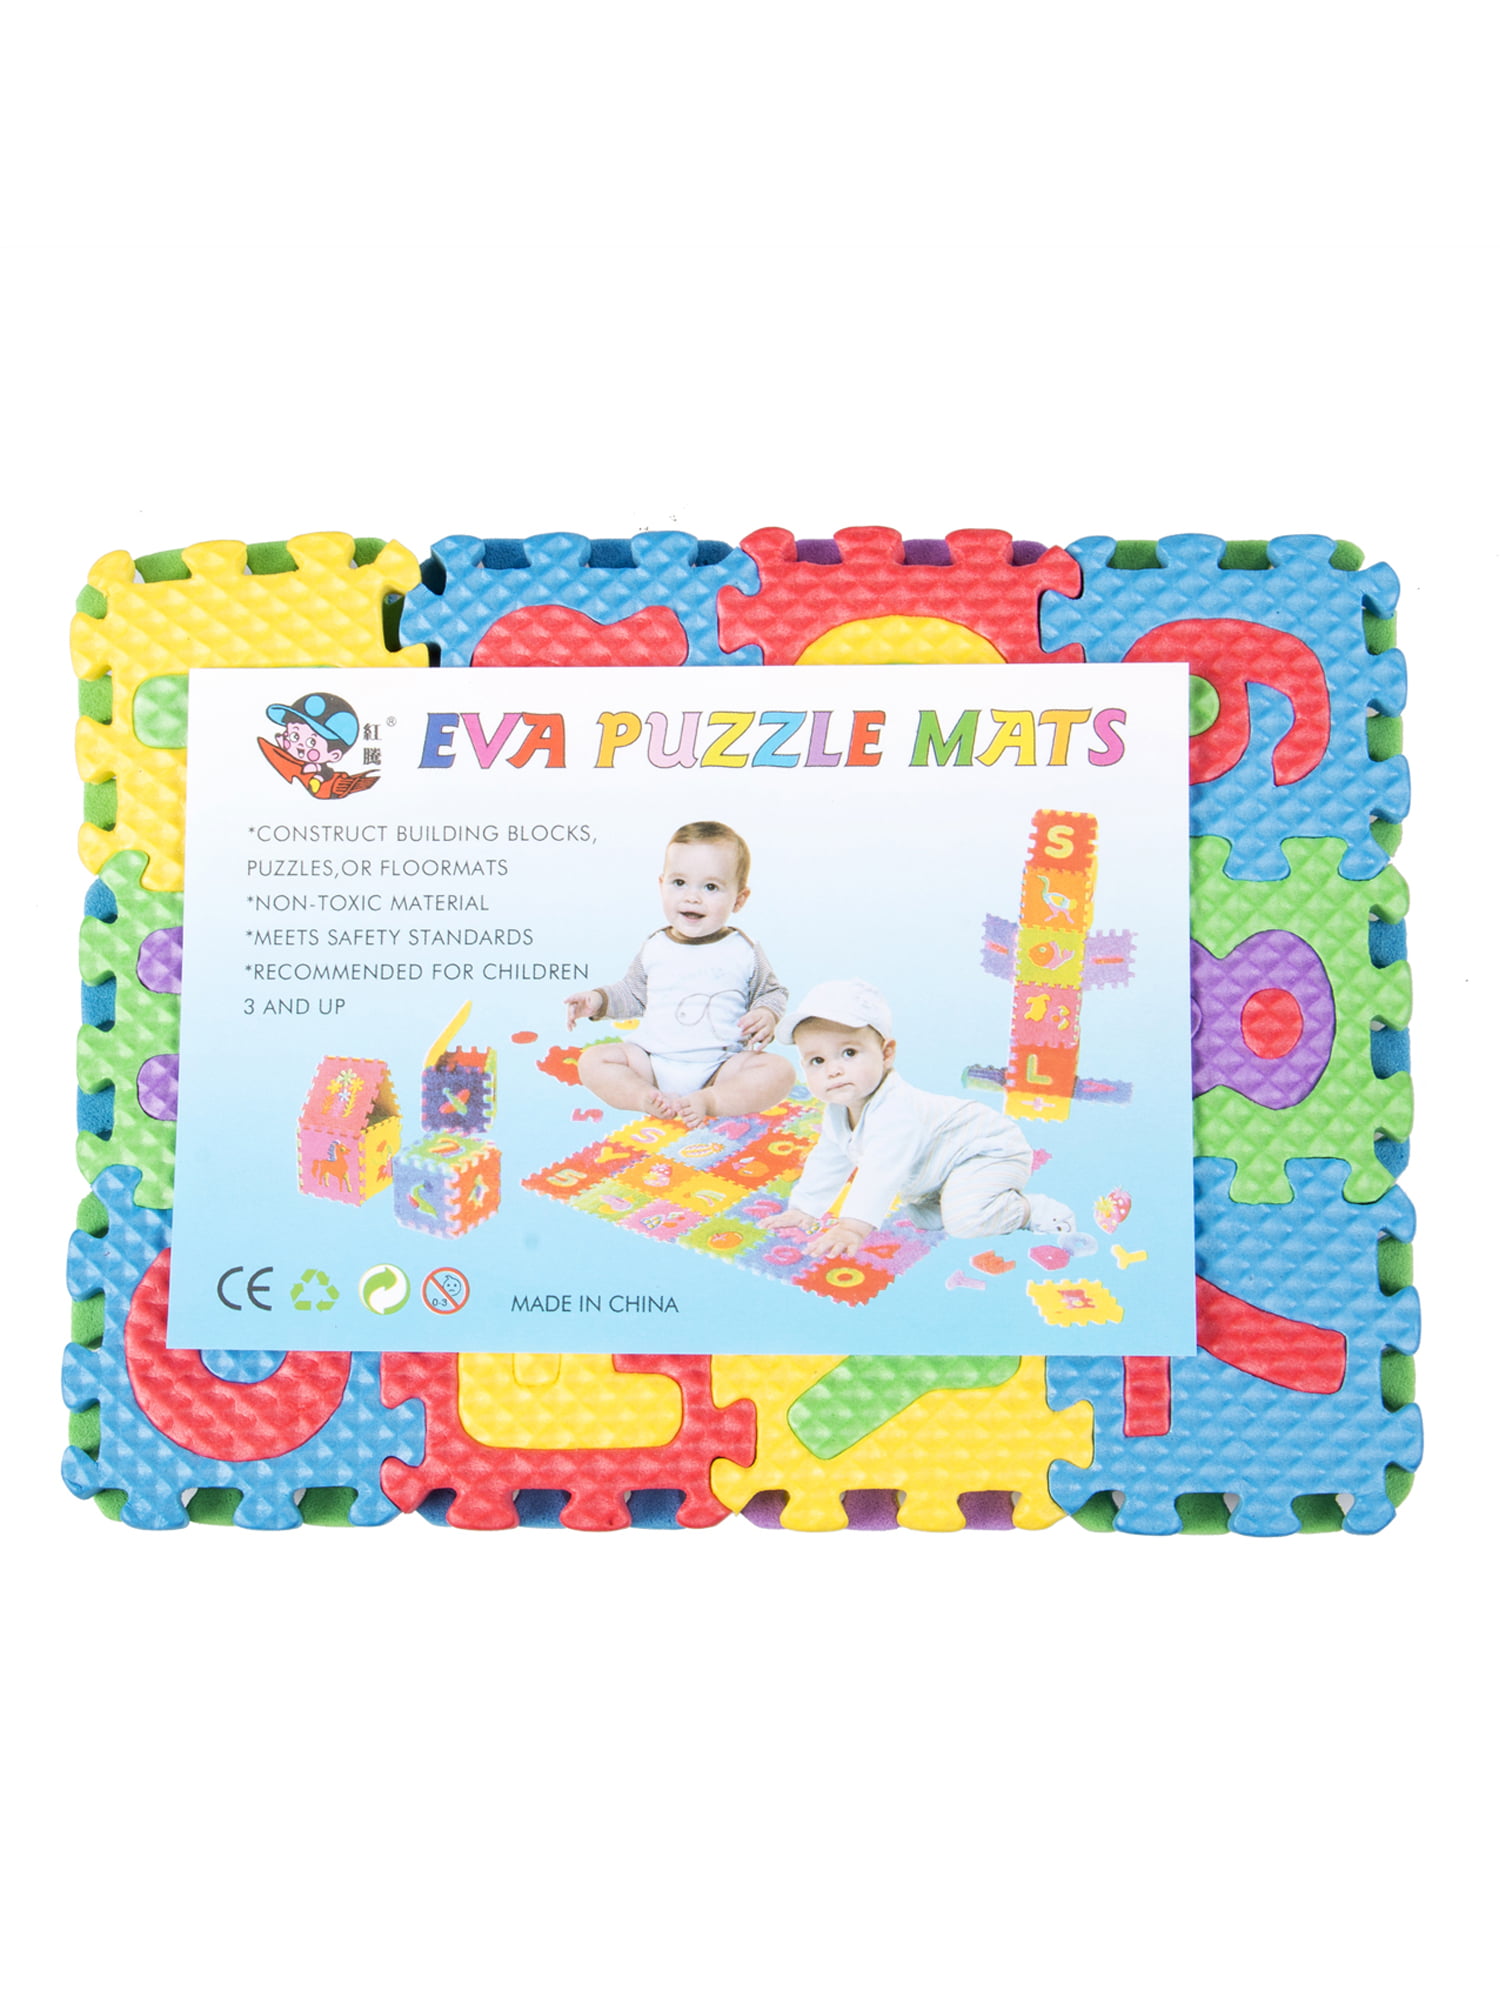 Cars EVA Foam Floor Puzzle Mat Kids Play Construct Building Blocks Floormats 